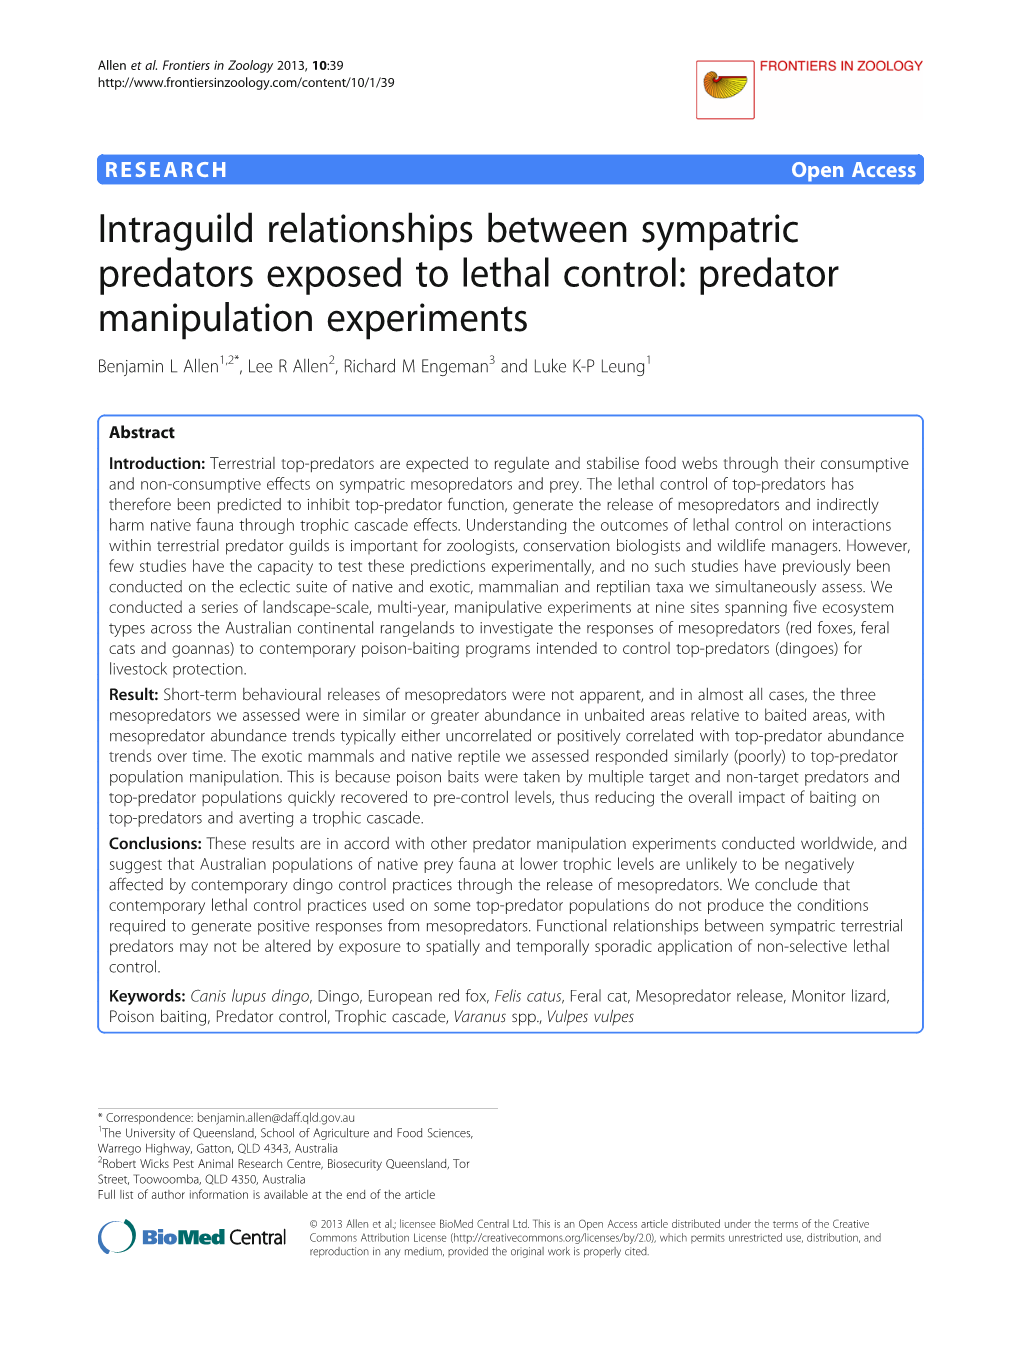 Intraguild Relationships Between Sympatric Predators